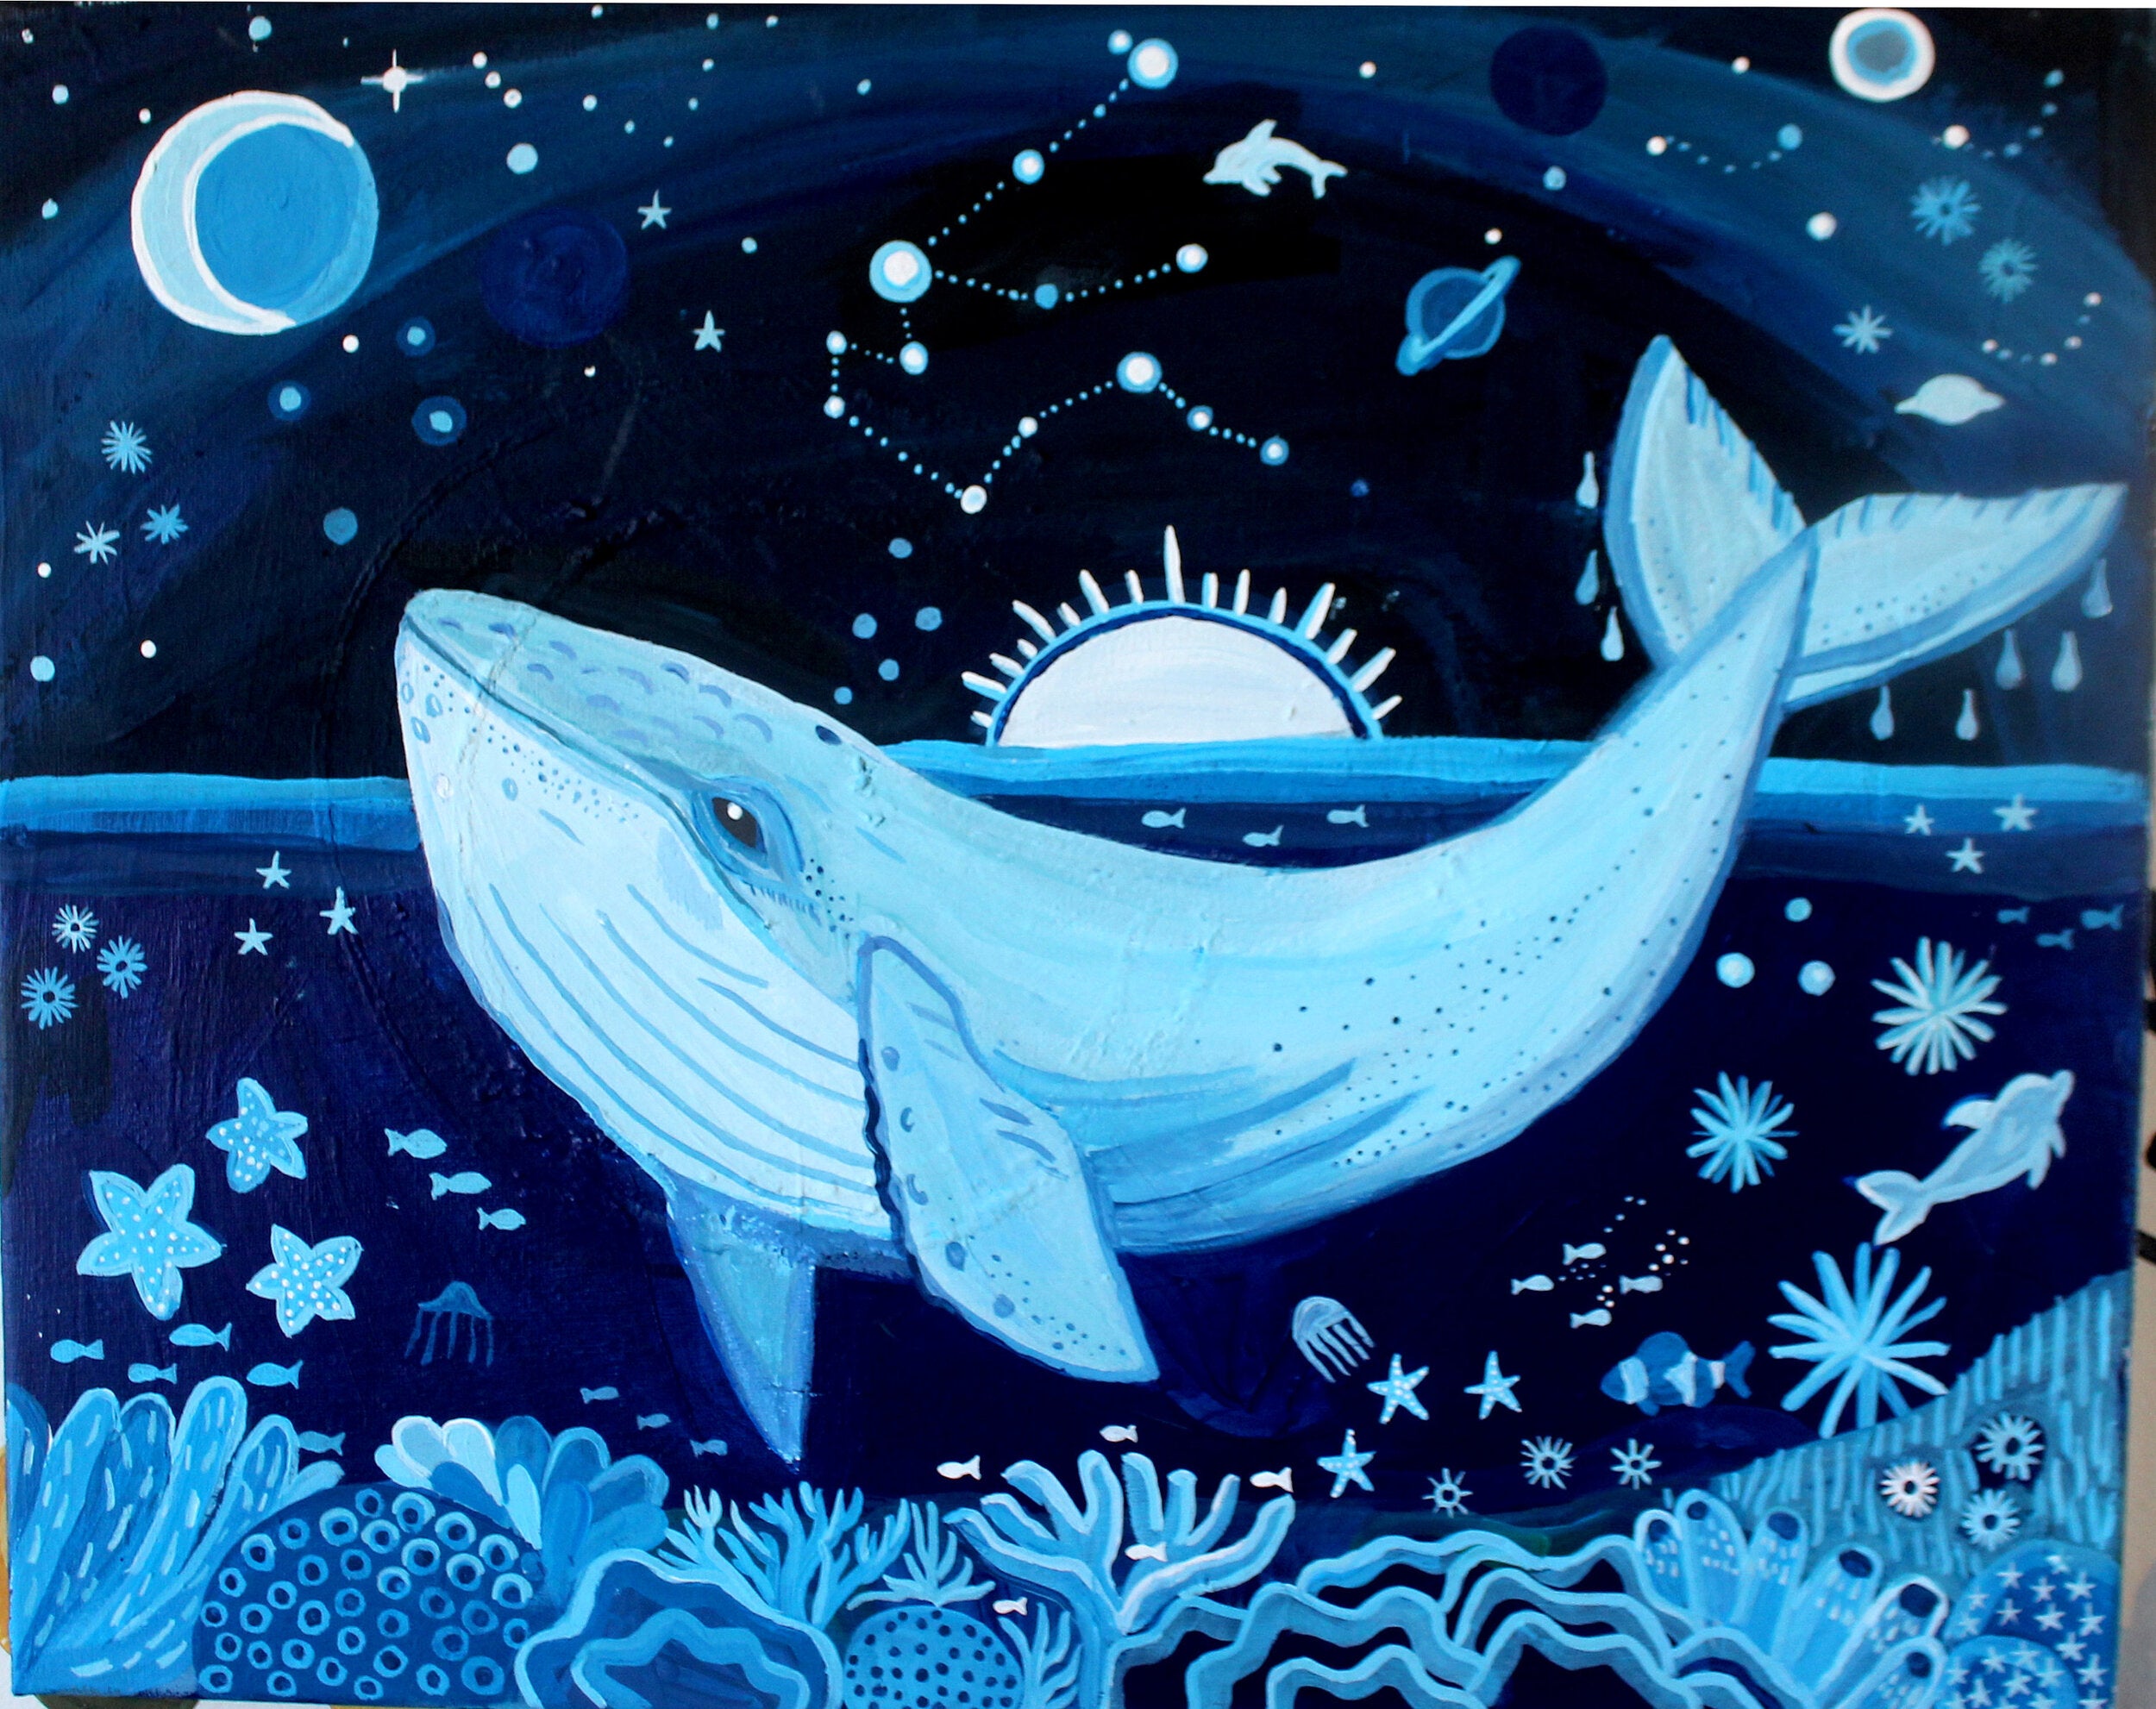 Cosmic whale print